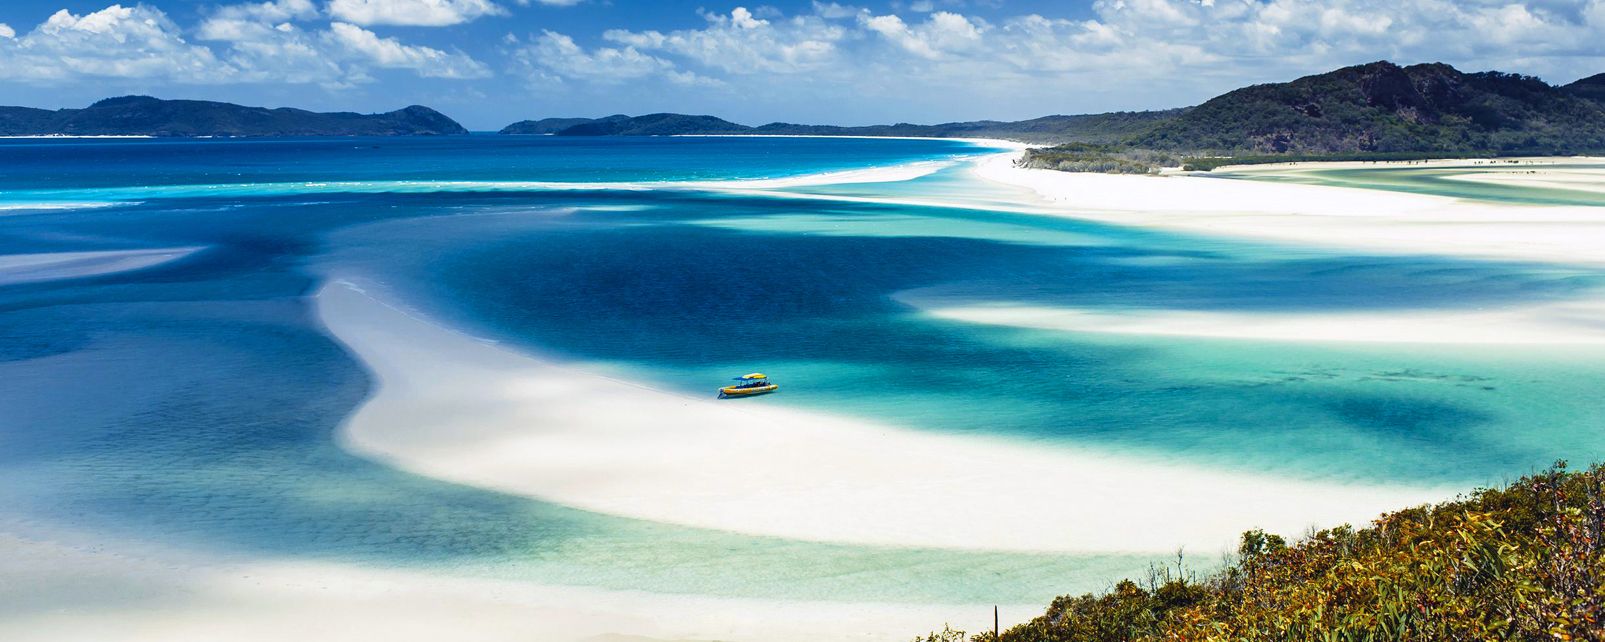 The Whitsunday archipelago - Australia